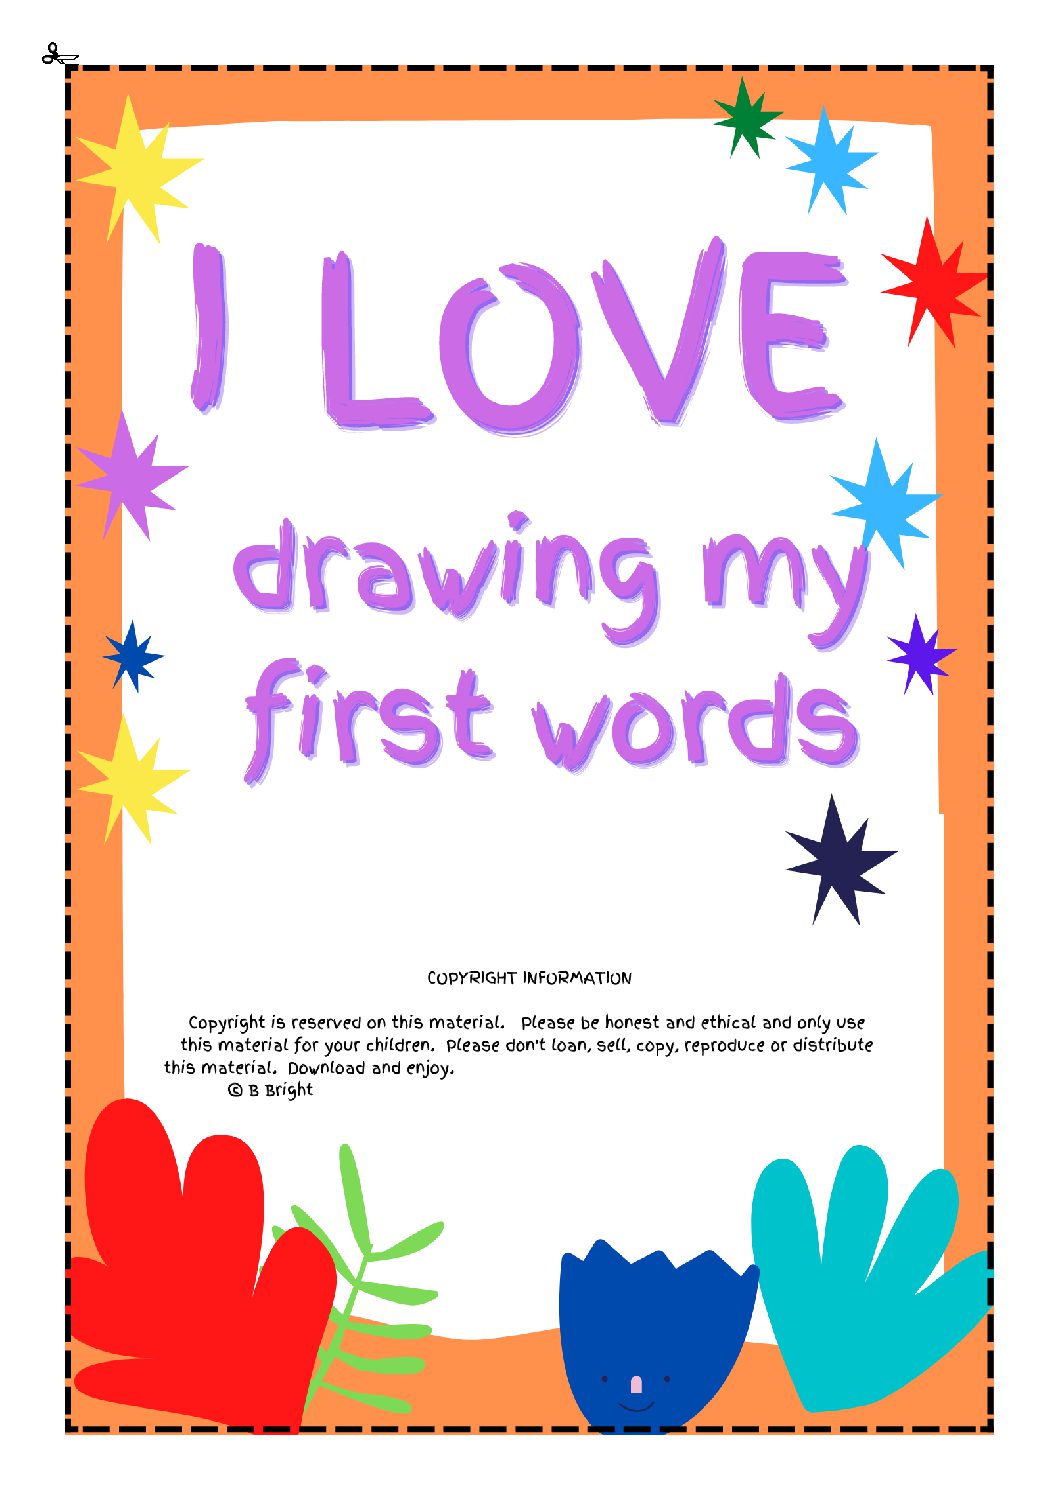 I love drawing 3 letter words • Teacha!